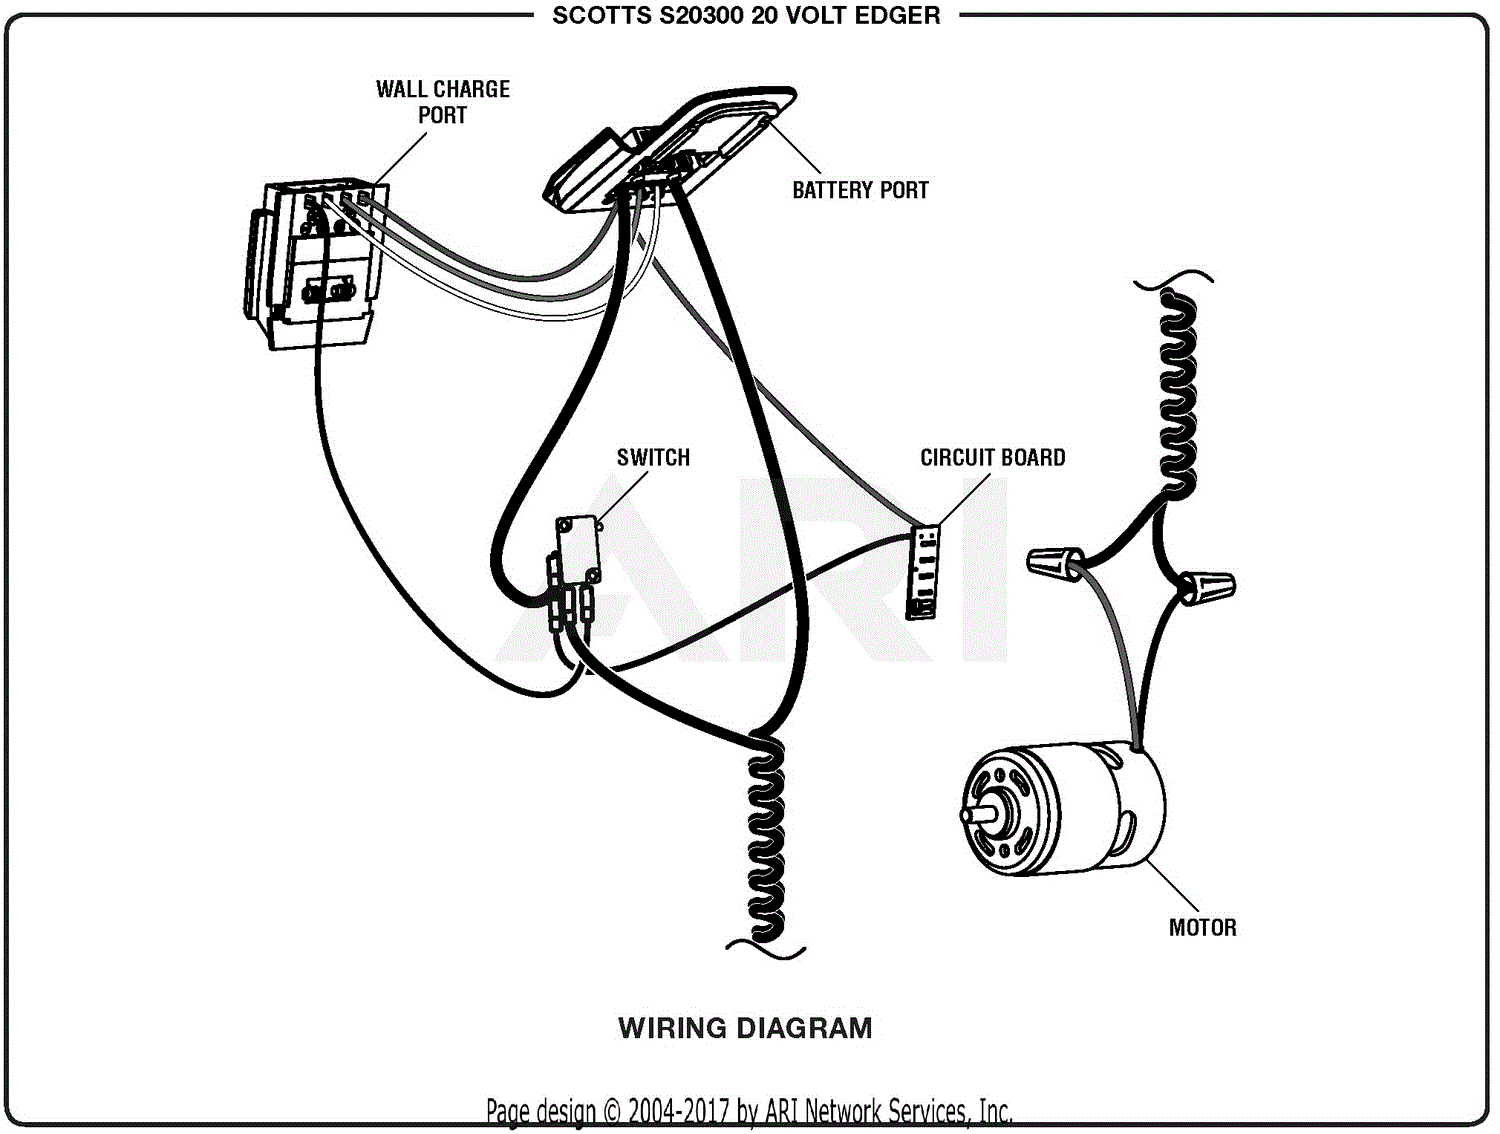 Homelite S20300 20 Volt Edger Parts Diagram For Wiring Diagram